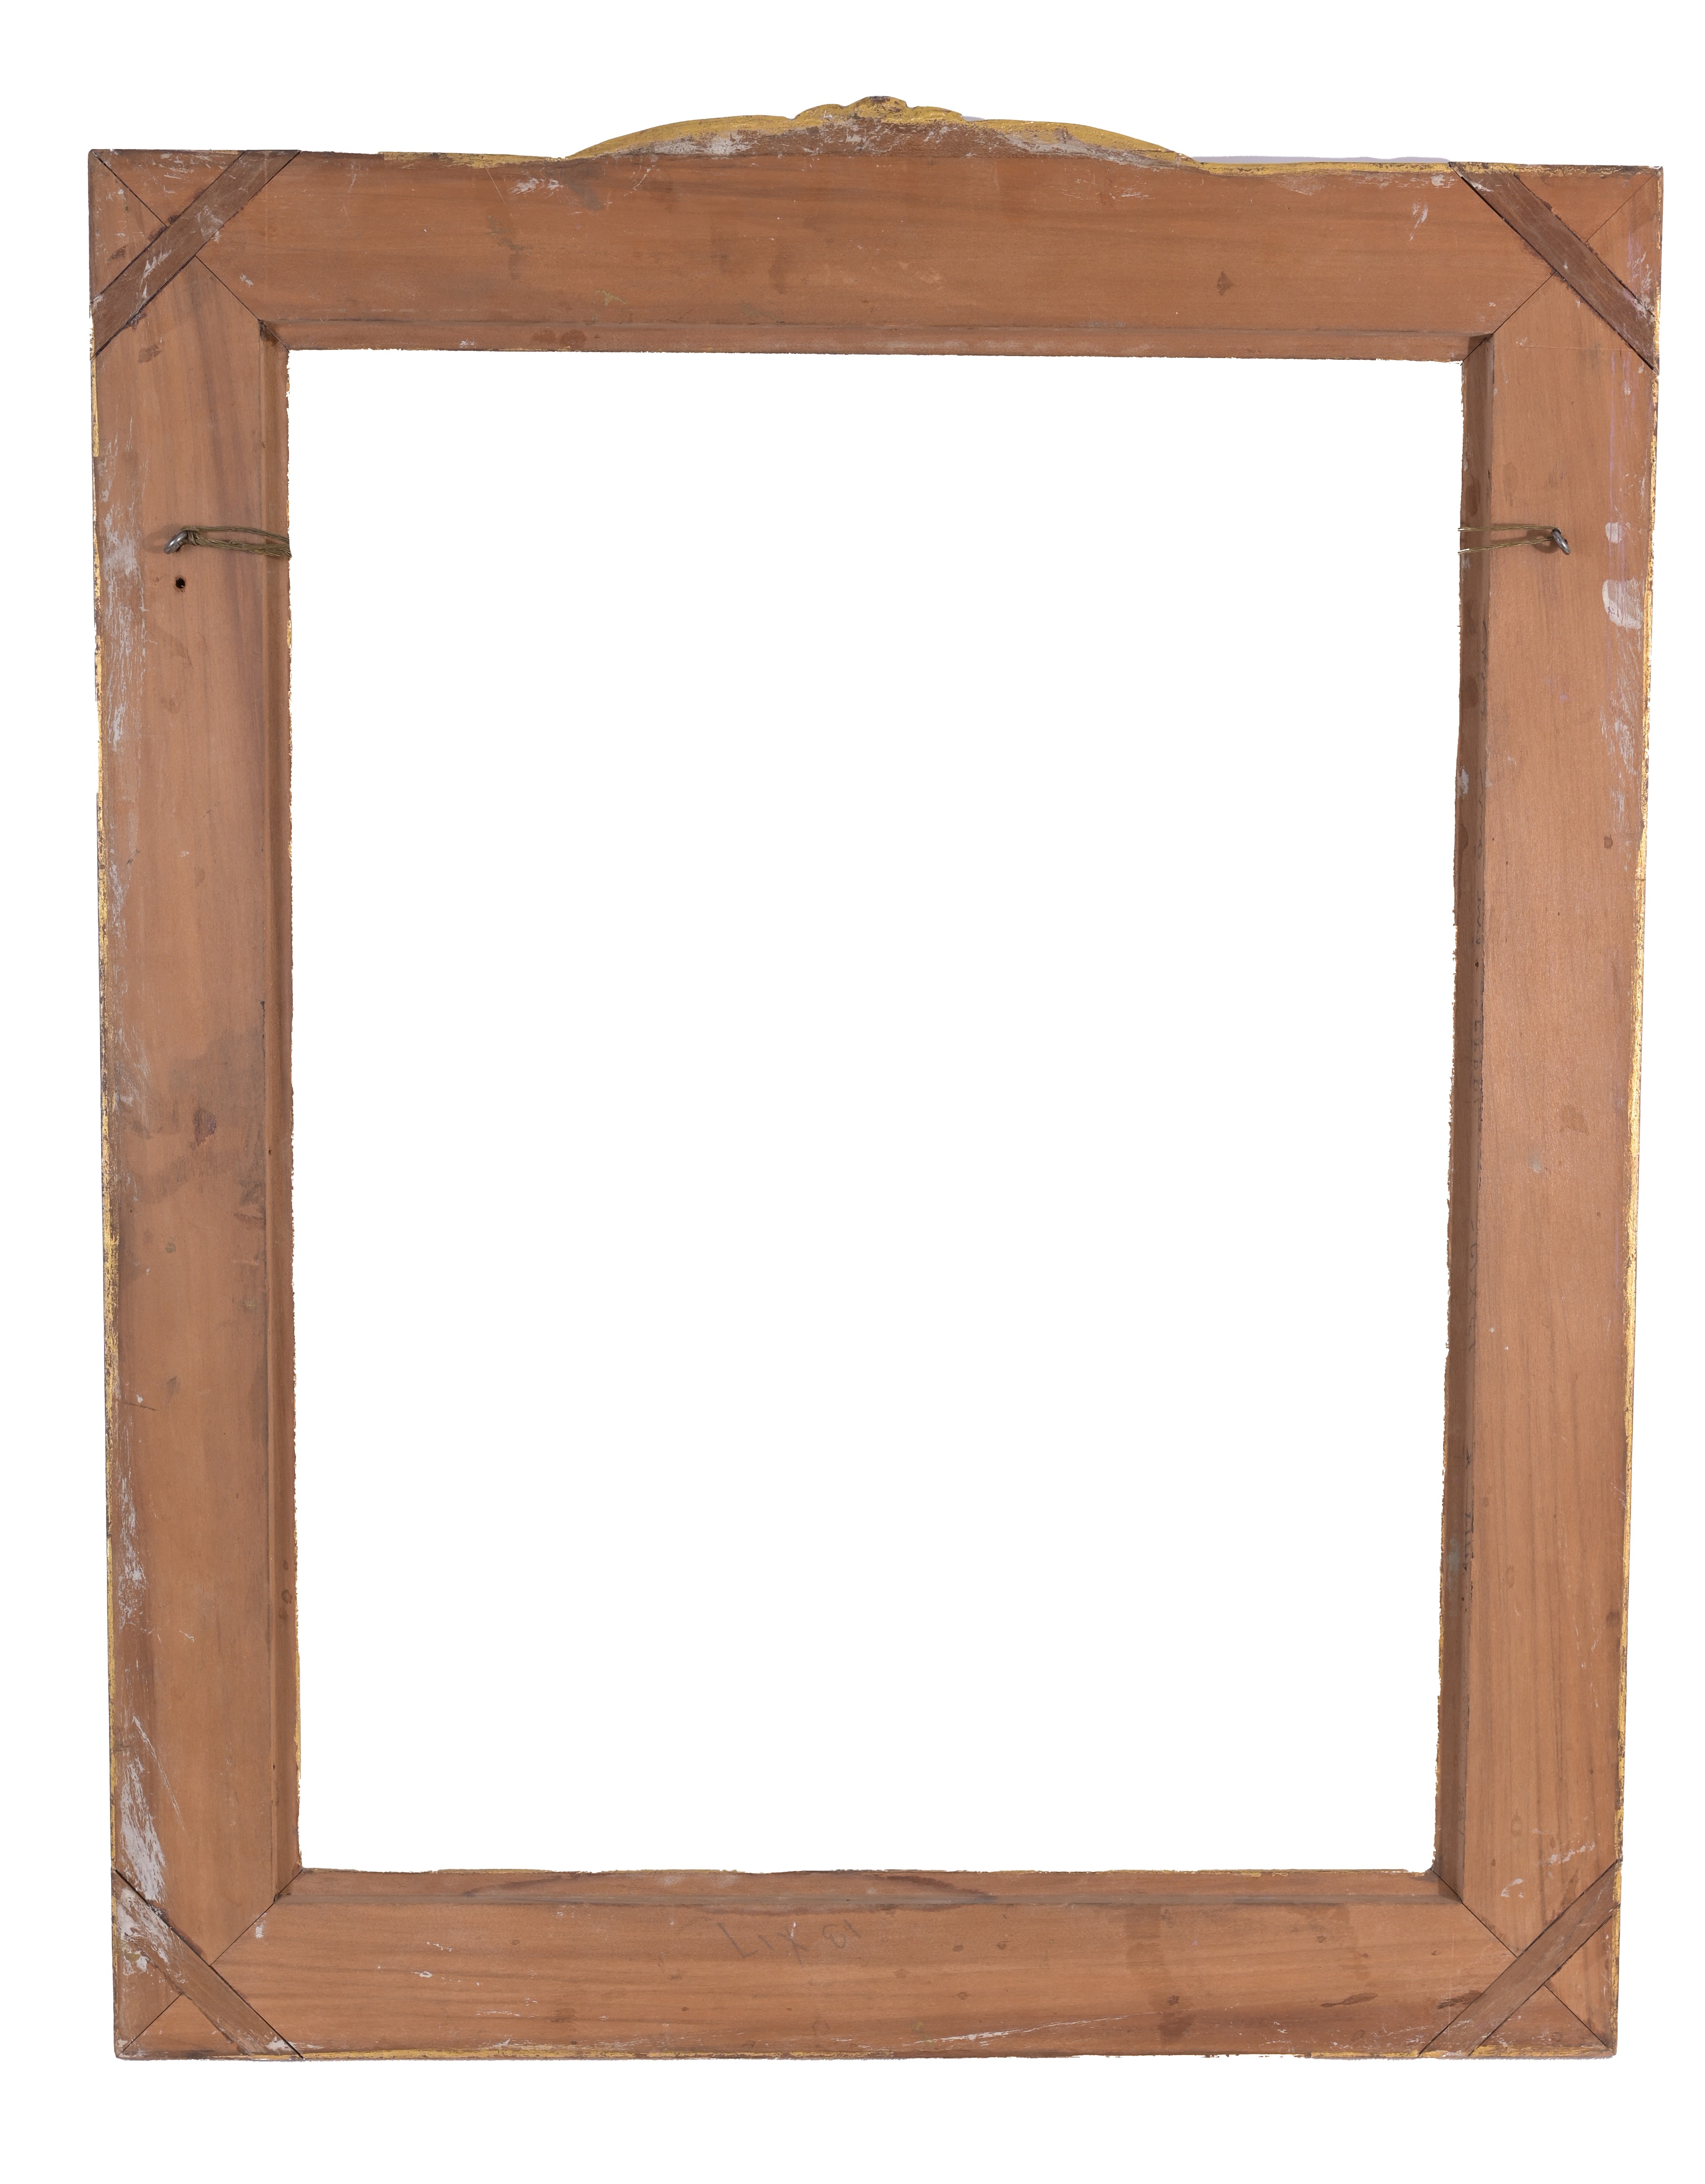 Newcomb Macklin Frame - 17.25 x 13 1/8 - Image 6 of 7